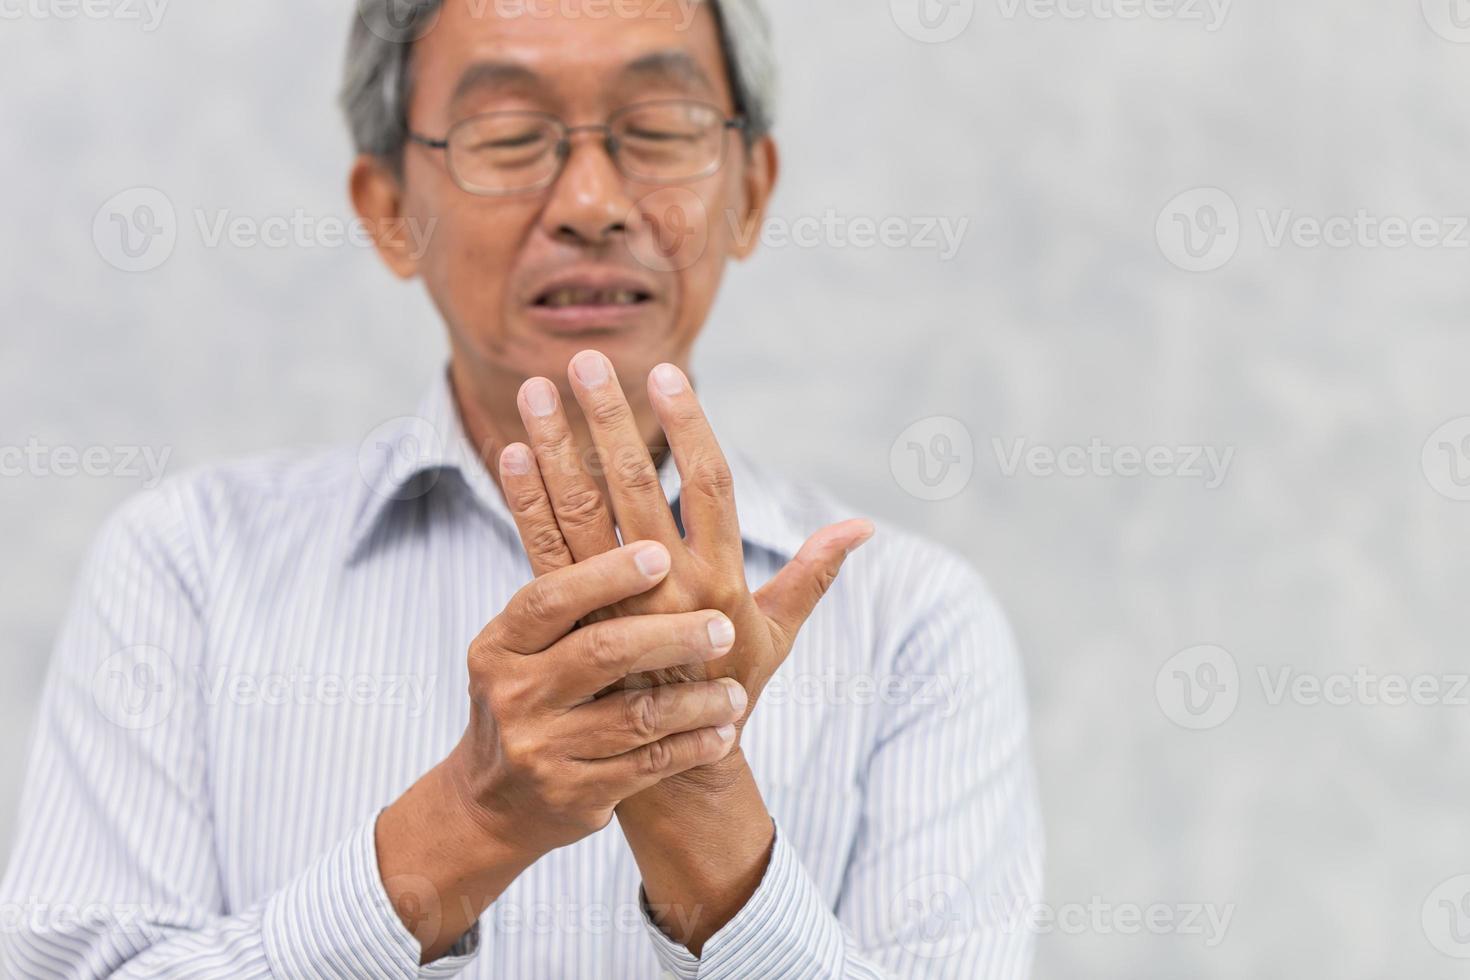 elder hand pain with Trigger Finger or rheumatoid arthritis. photo